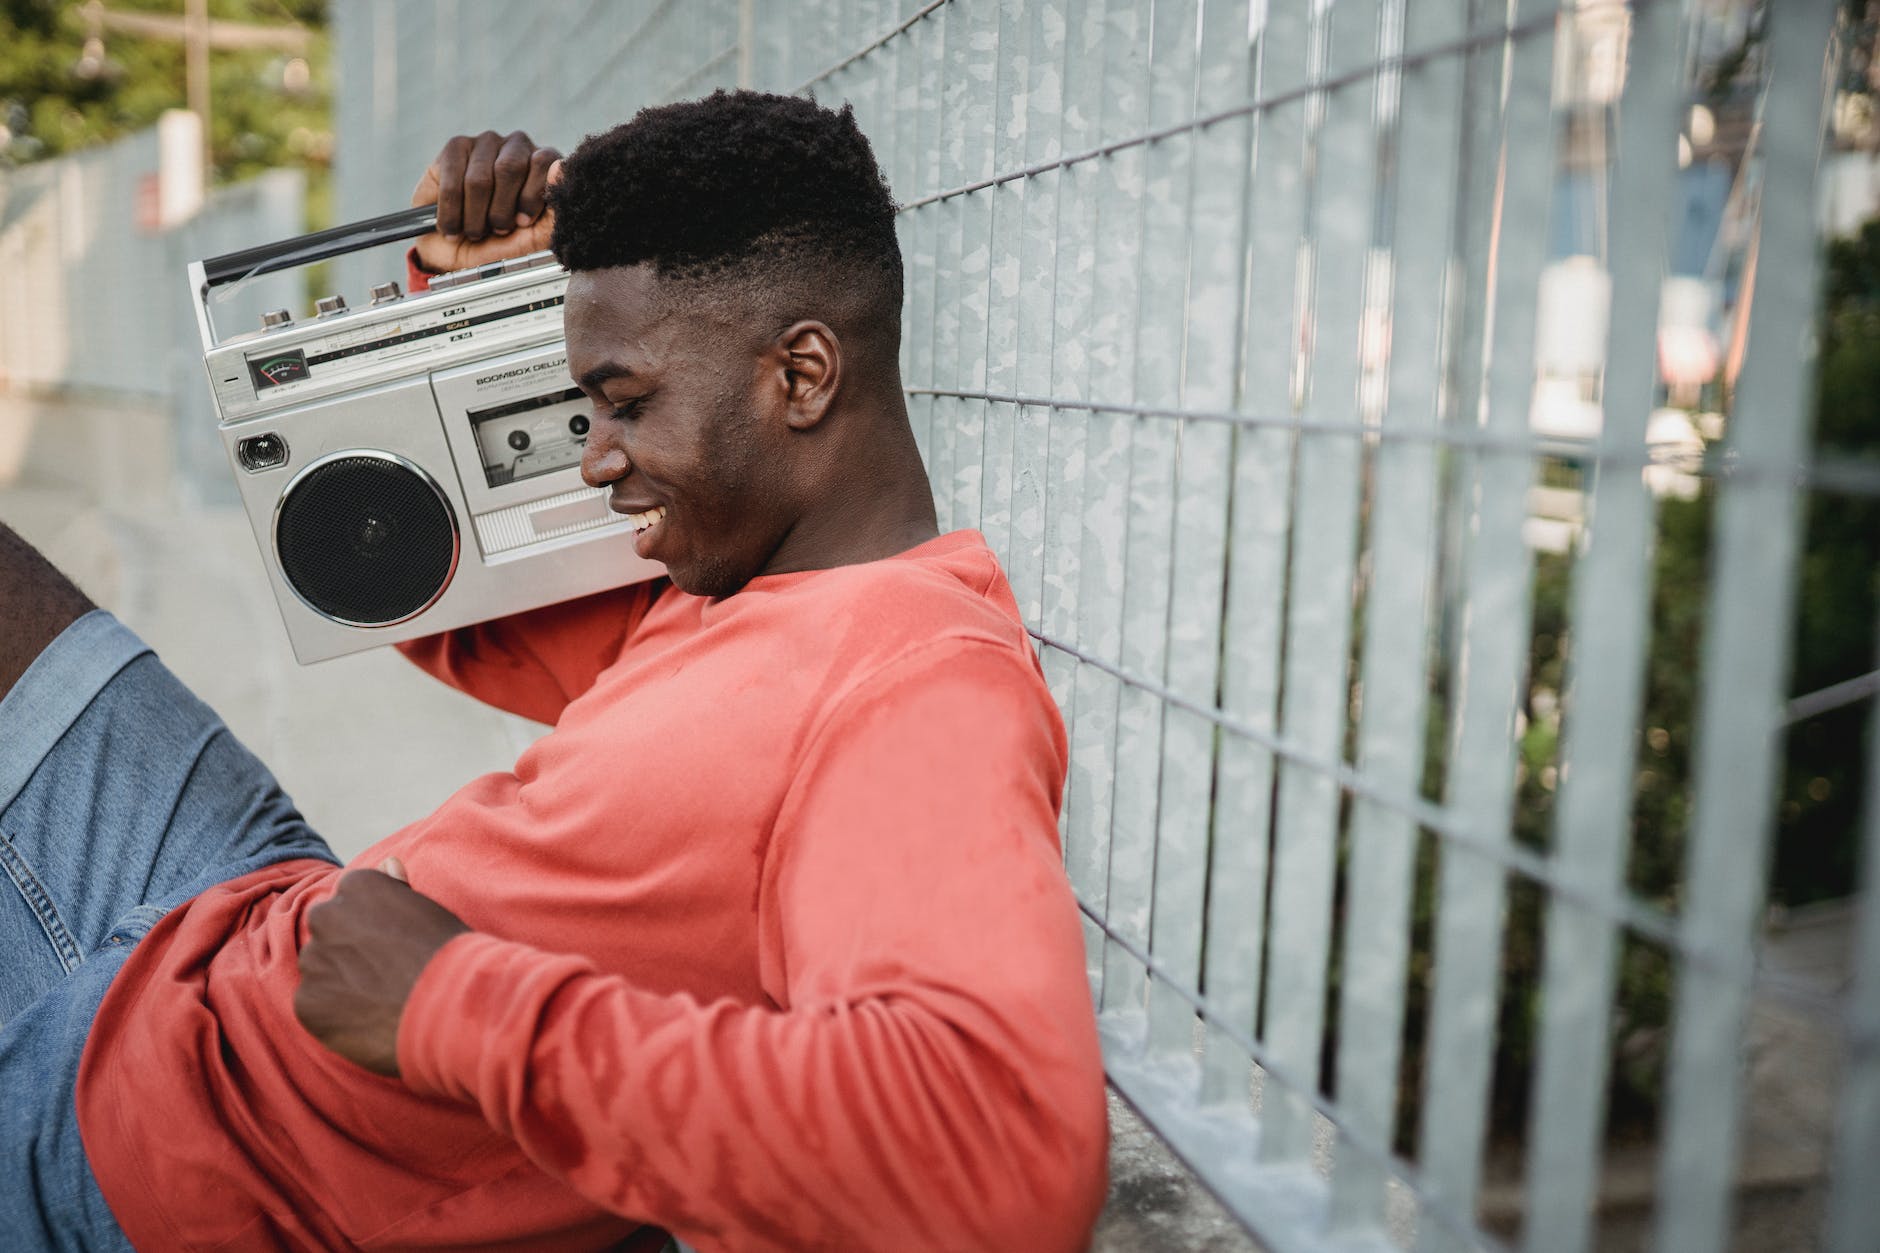 smiling black man enjoying music from old tape recorder outdoors